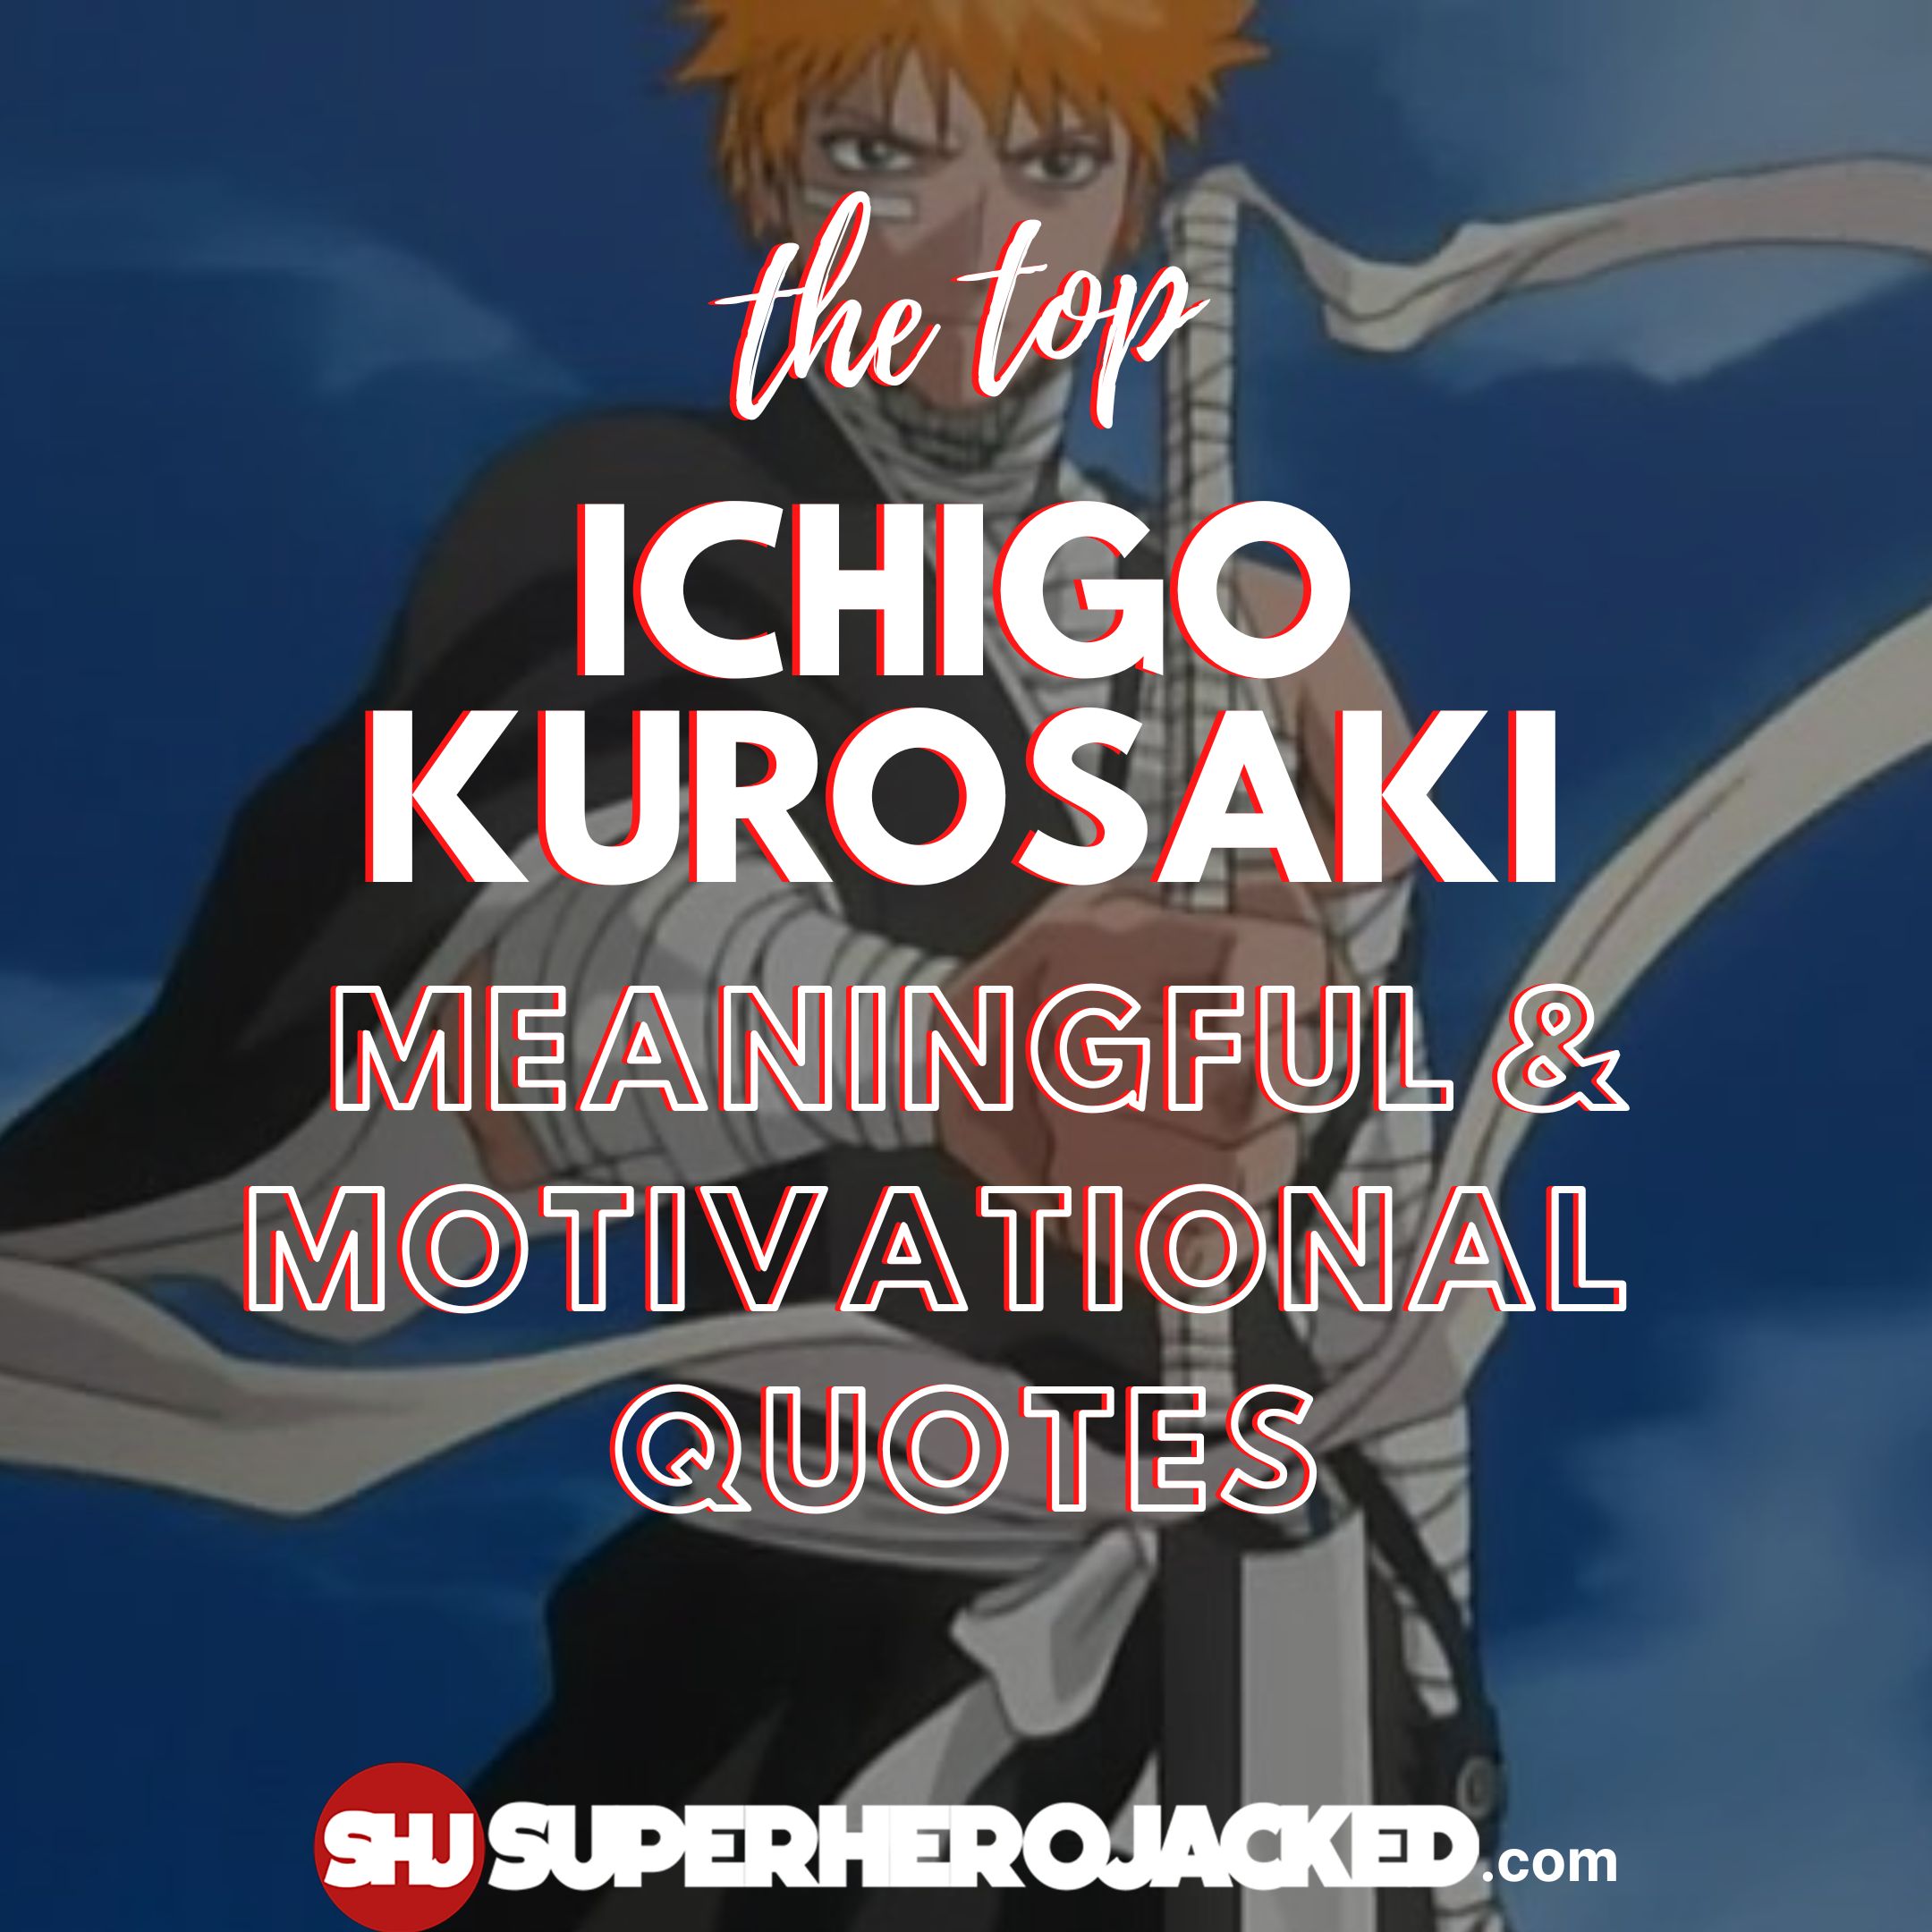 Top Ten Ichigo Kurosaki Quotes: The Best Ichigo Quotes!